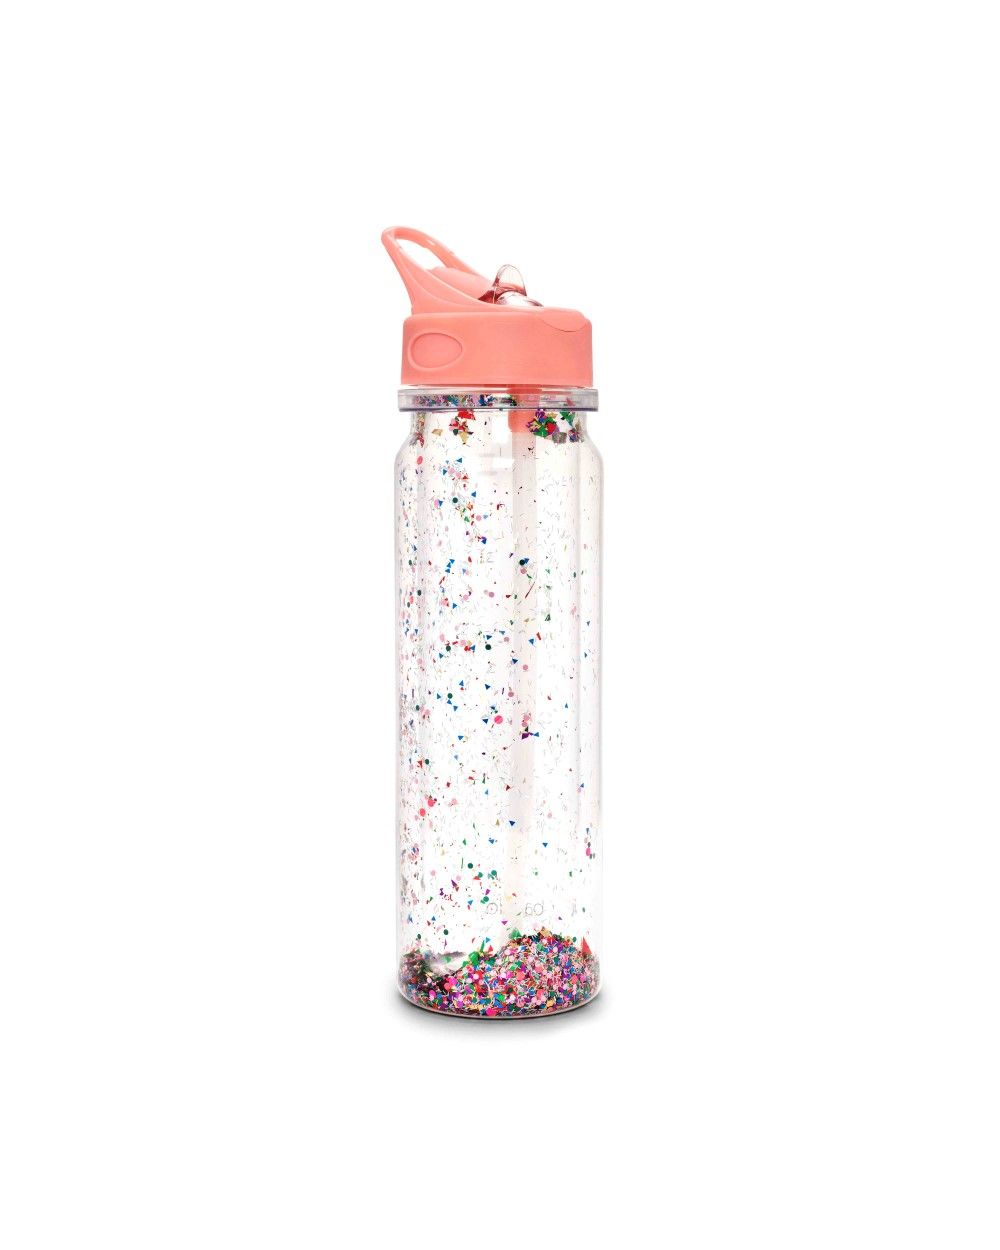 Ban.do Glitter Bomb Water Bottle Confetti